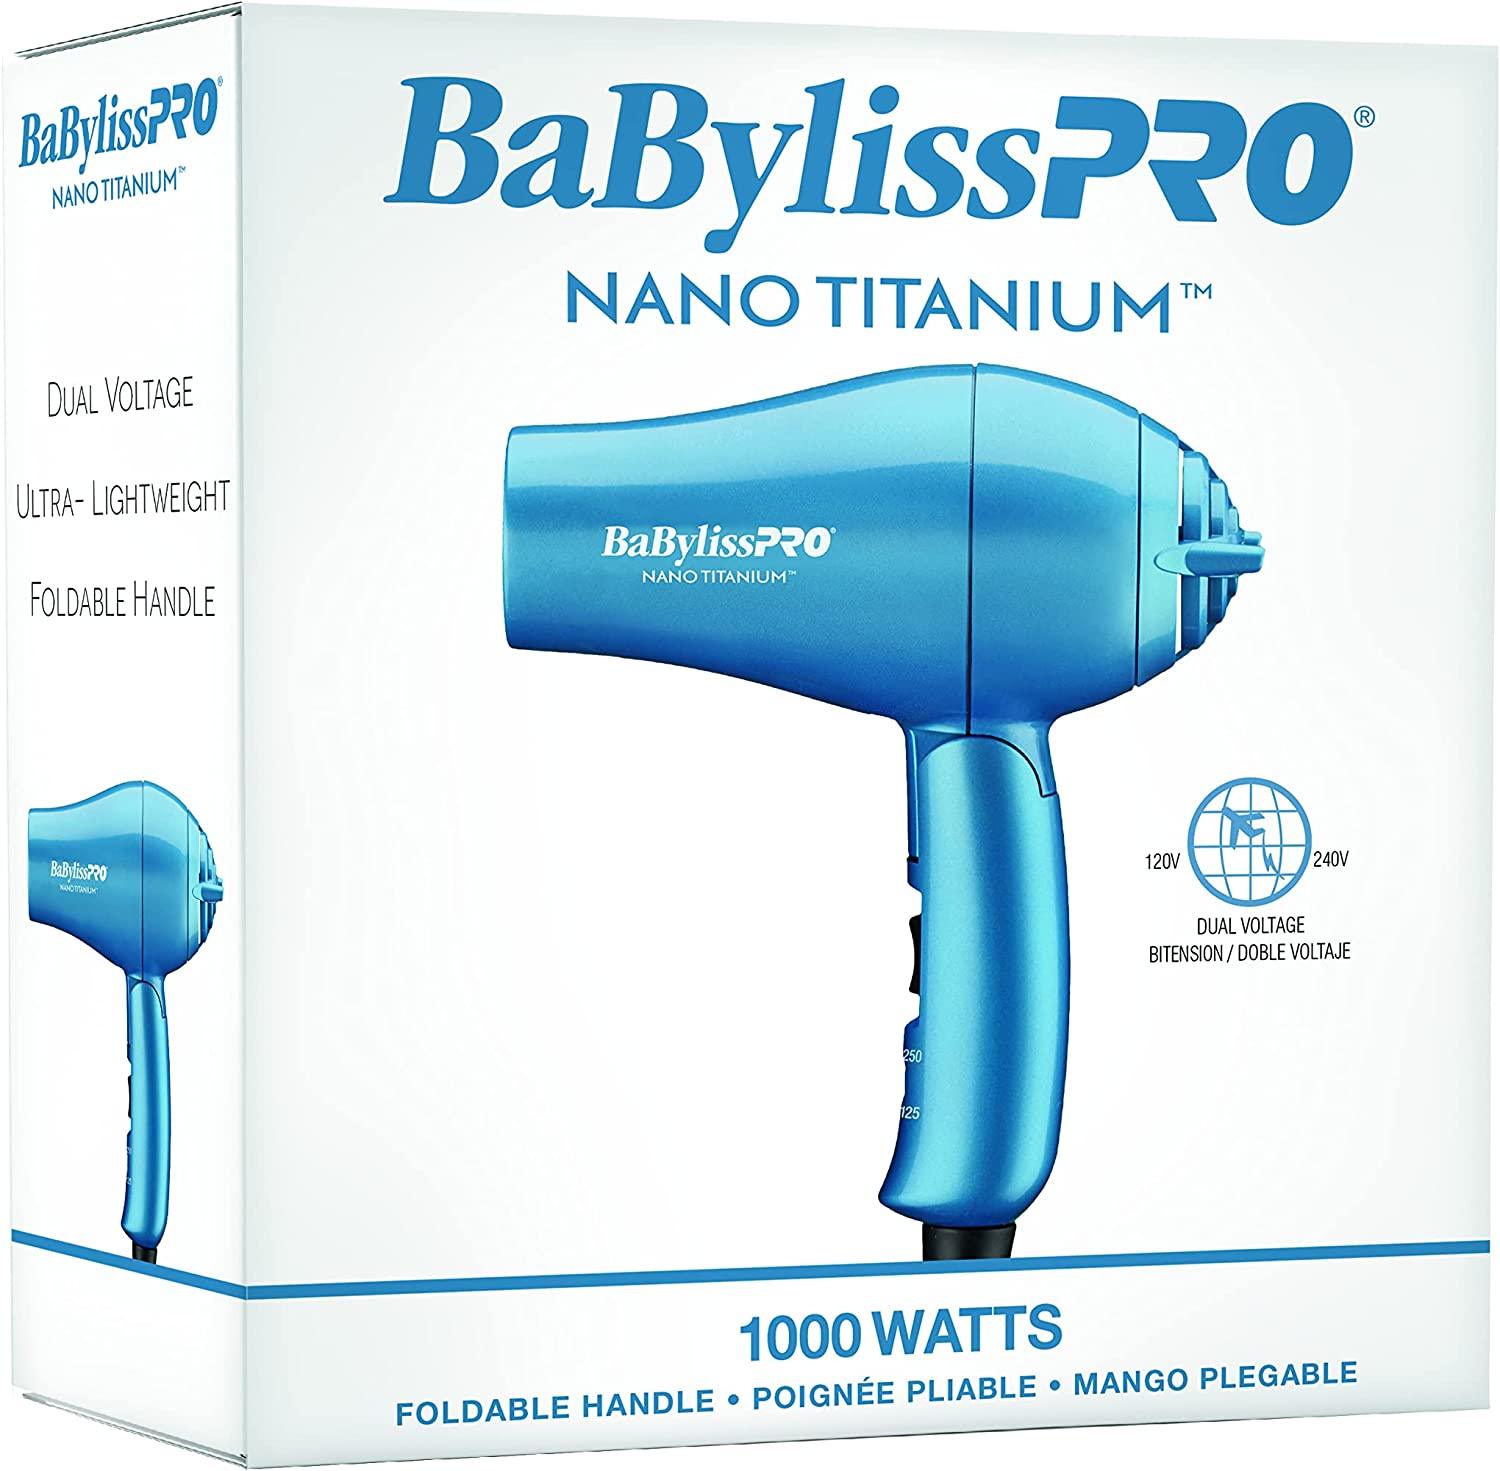 Babybliss pro nano titanium 1000W blue fold dryer - African Beauty Online